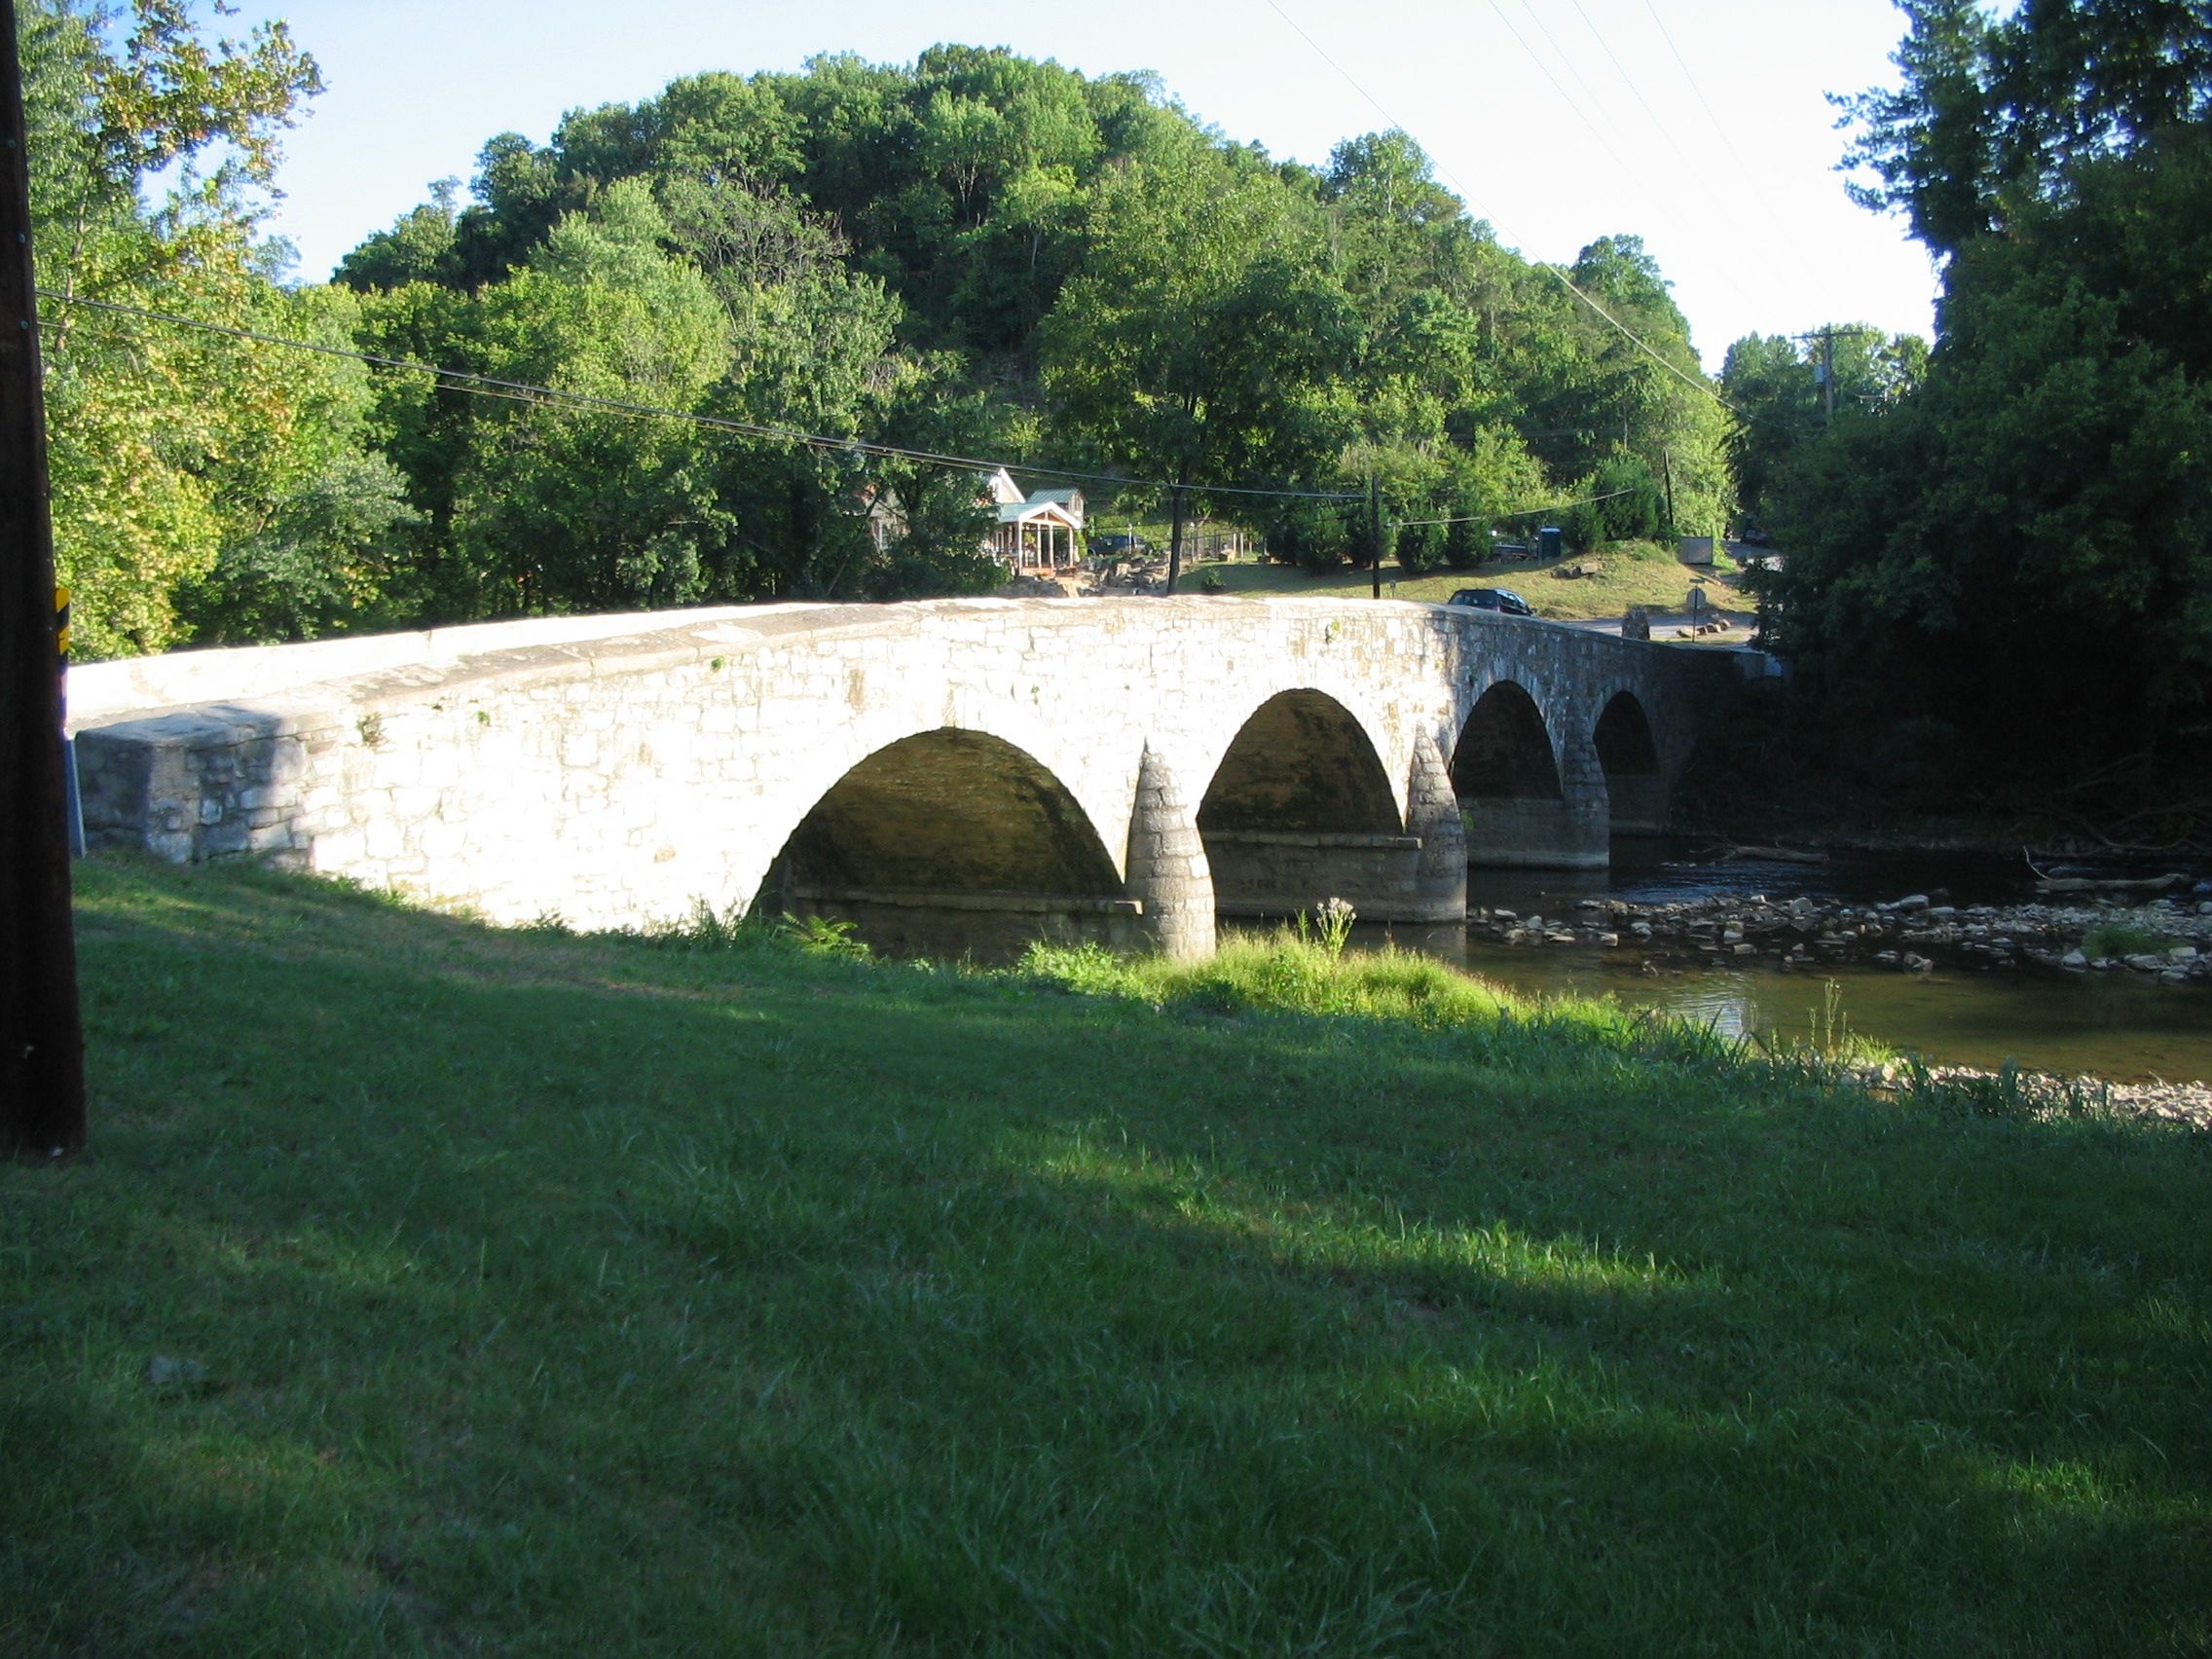 Antietam Iron Works Bridge